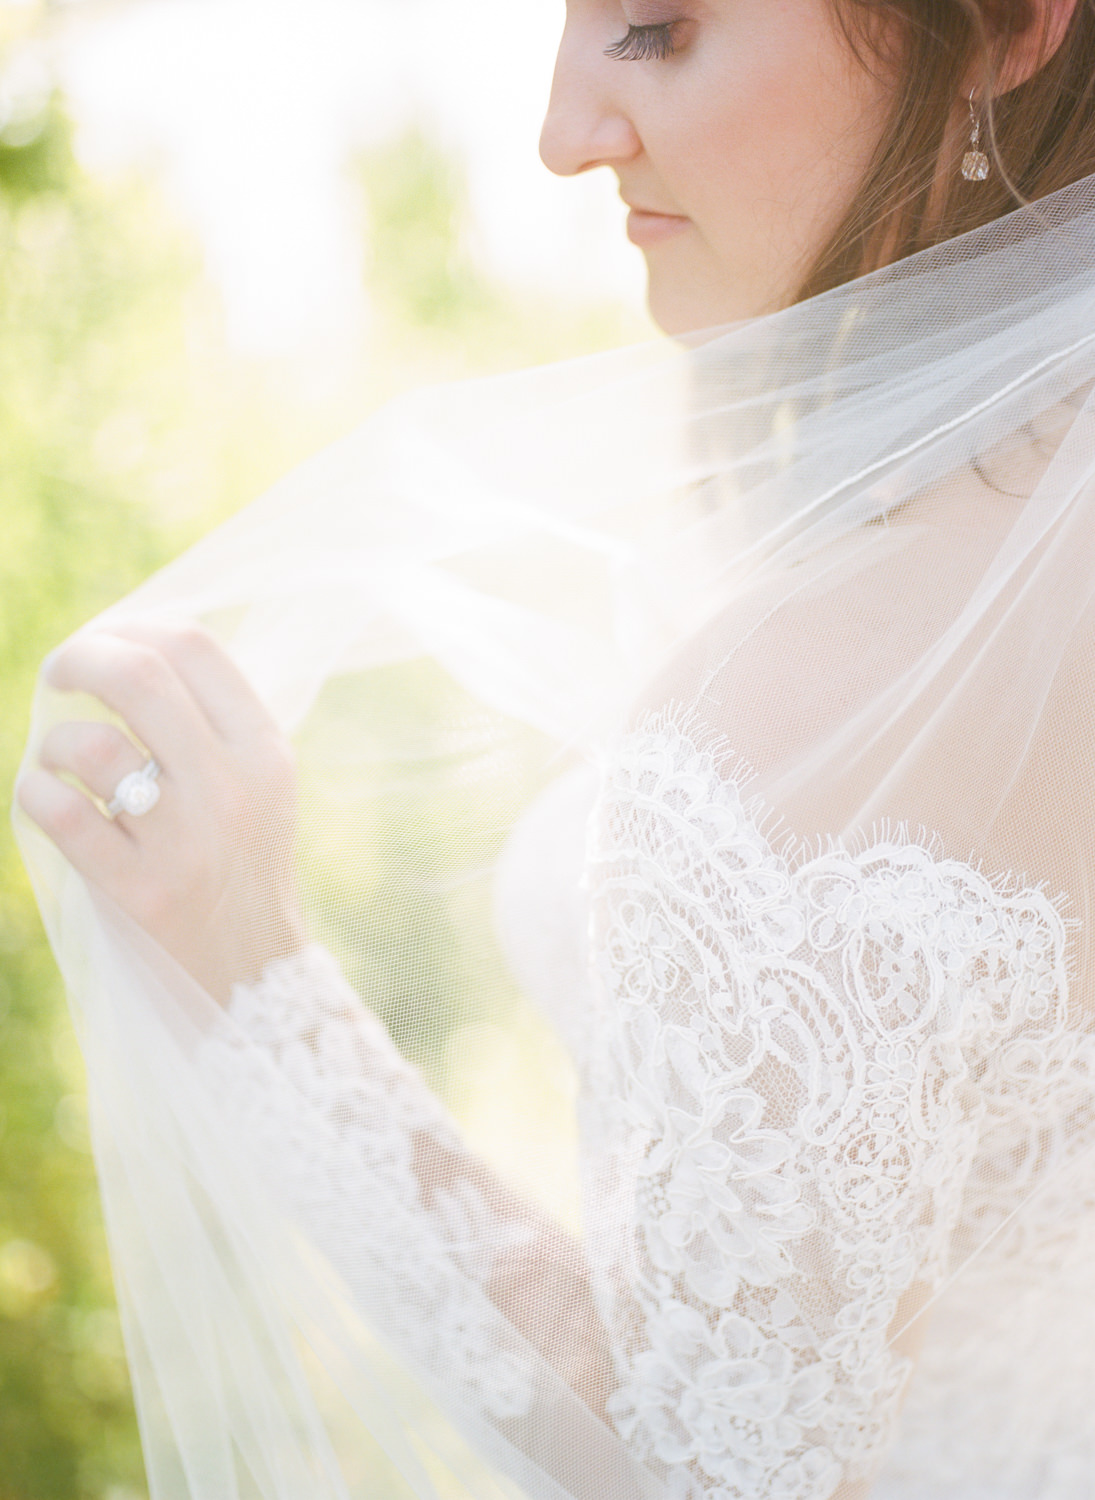 Bride with veil; St. Louis fine art film wedding photographer Erica Robnett Photography